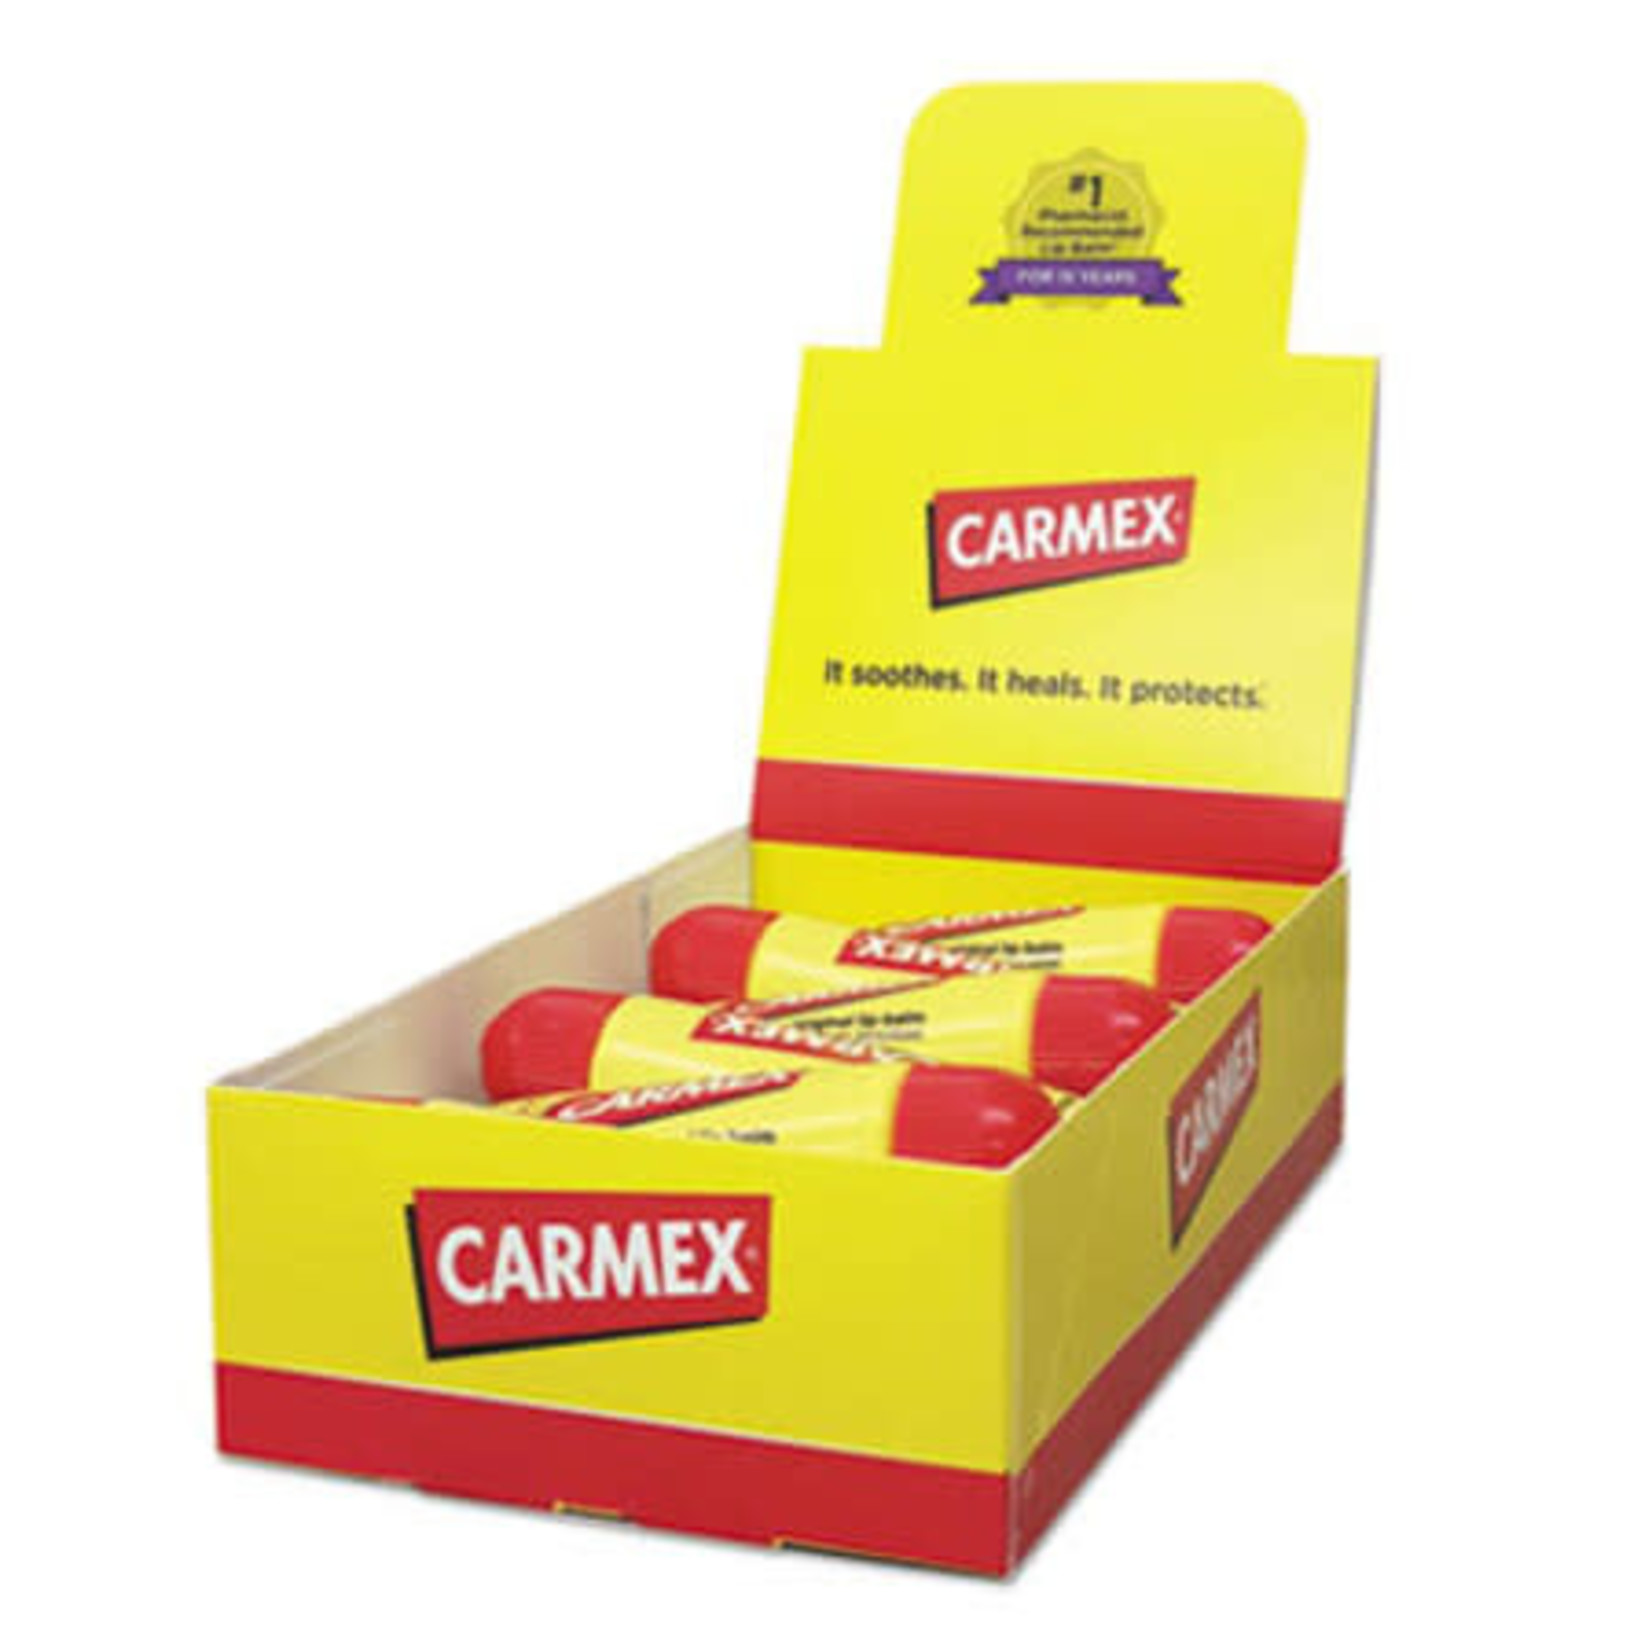 Carmex Carmex Moisturizing Lip Balm, Original